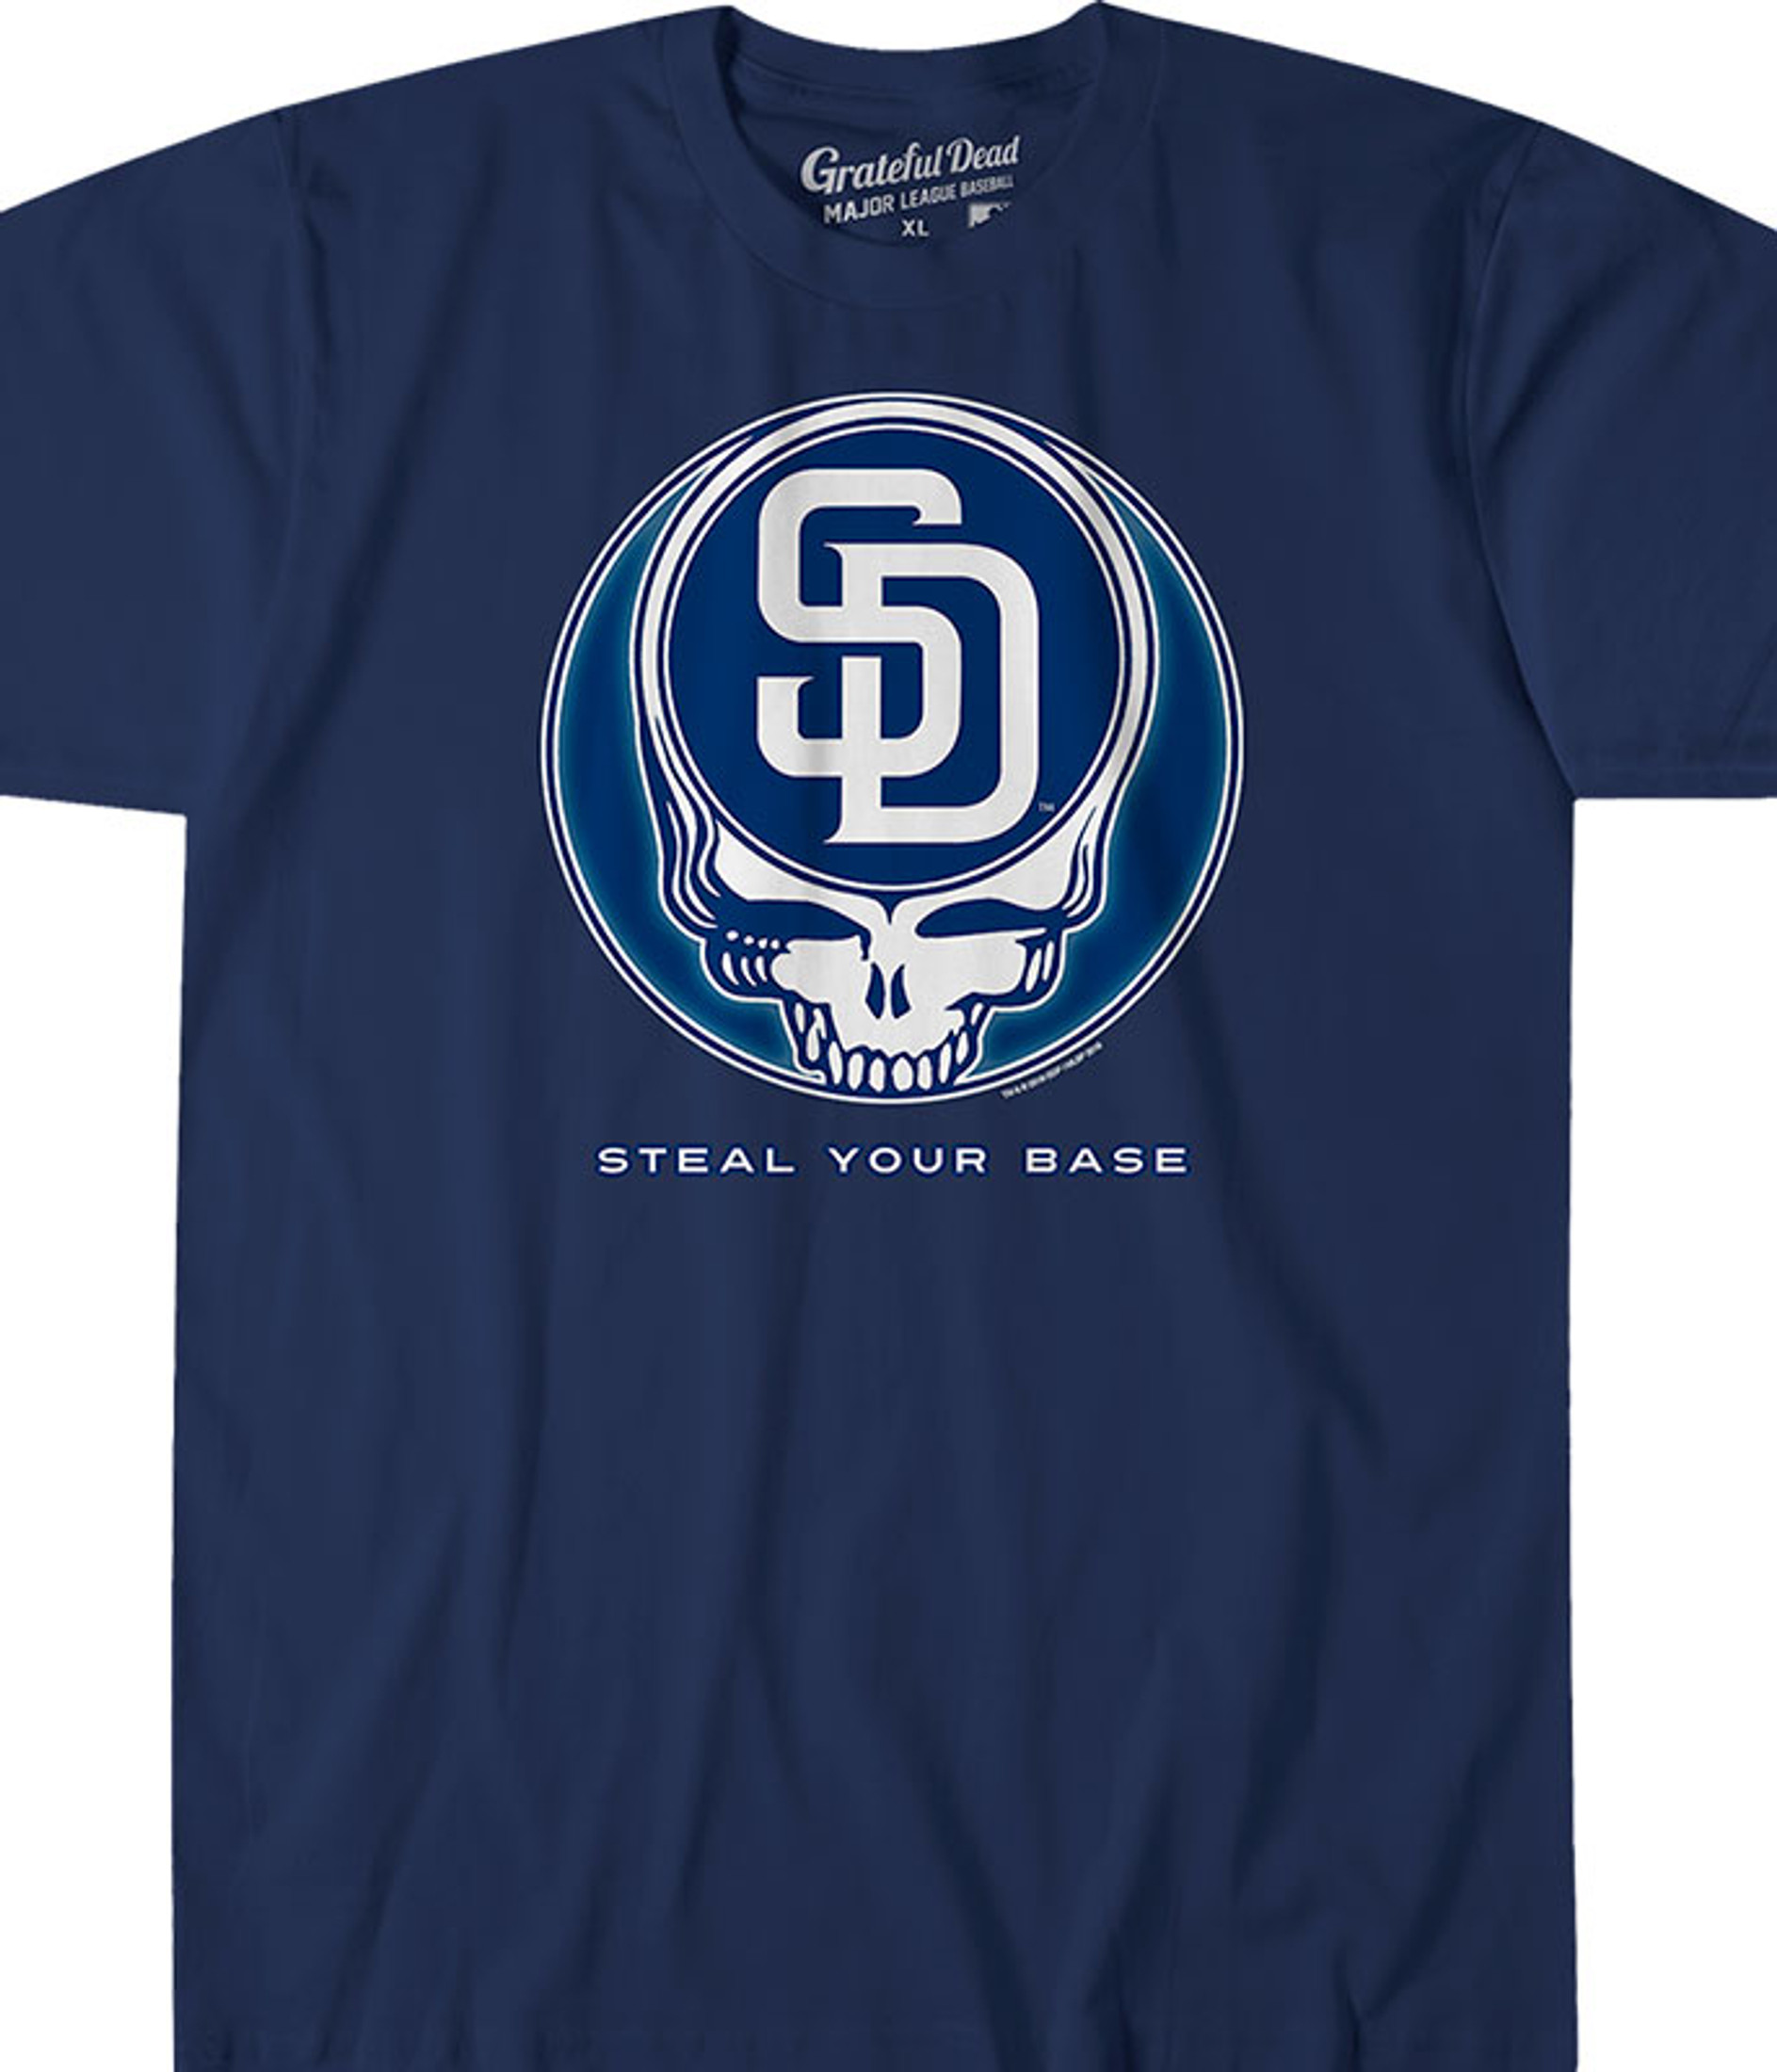 MLB Baseball San Diego Padres The Beatles Rock Band Shirt Women's